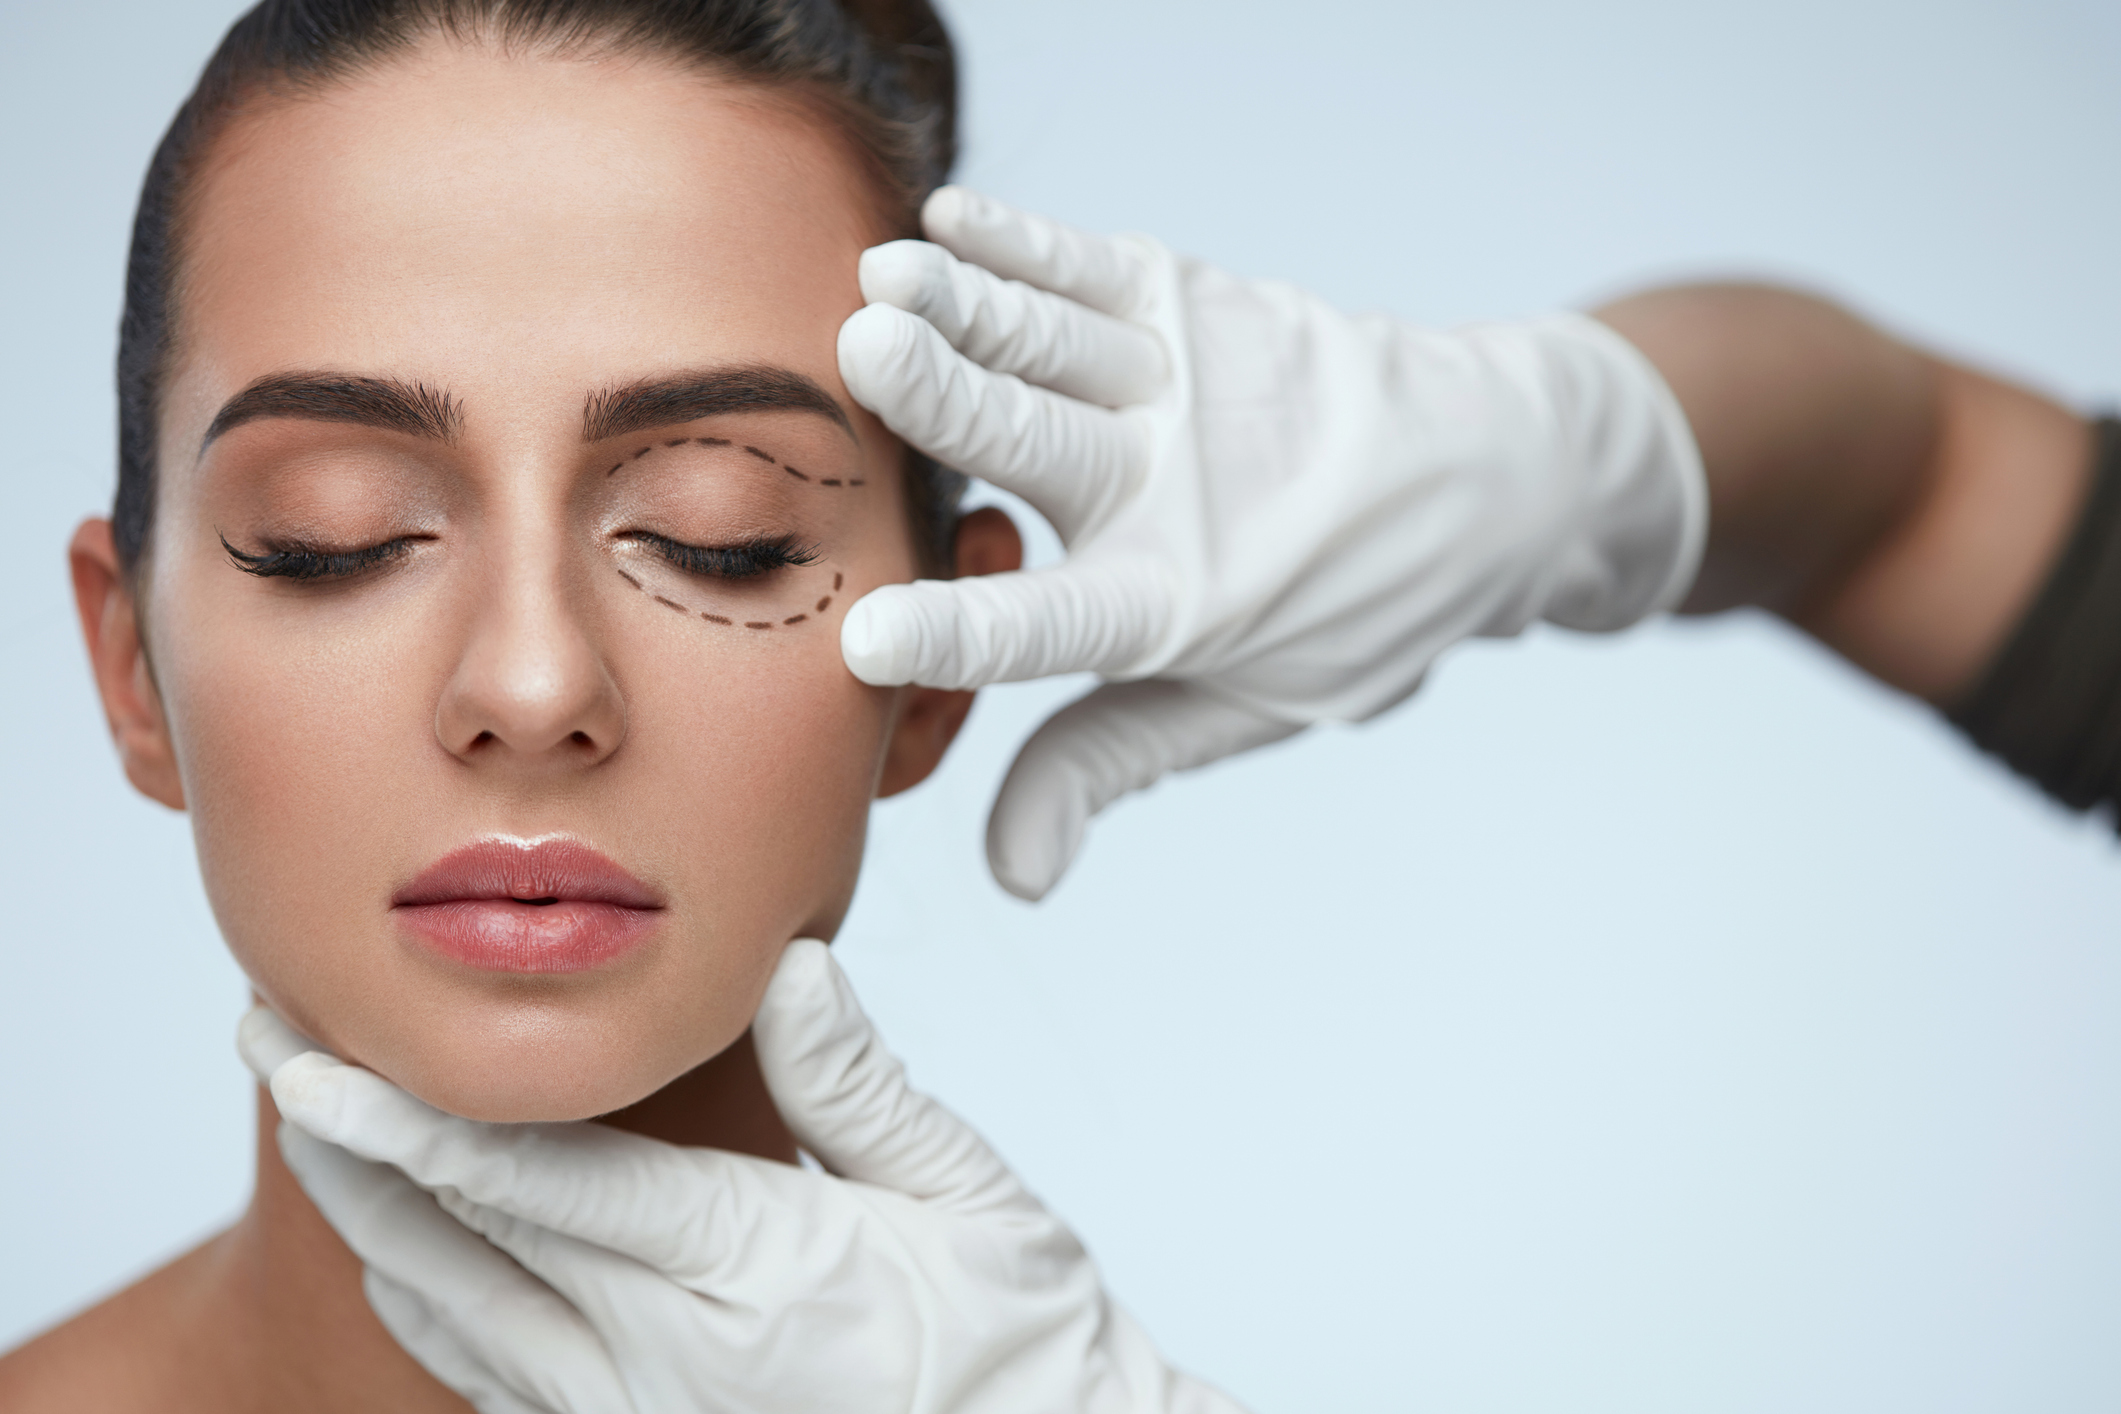 Cosmetic Eyelid Surgery: Beyond Just Aesthetics